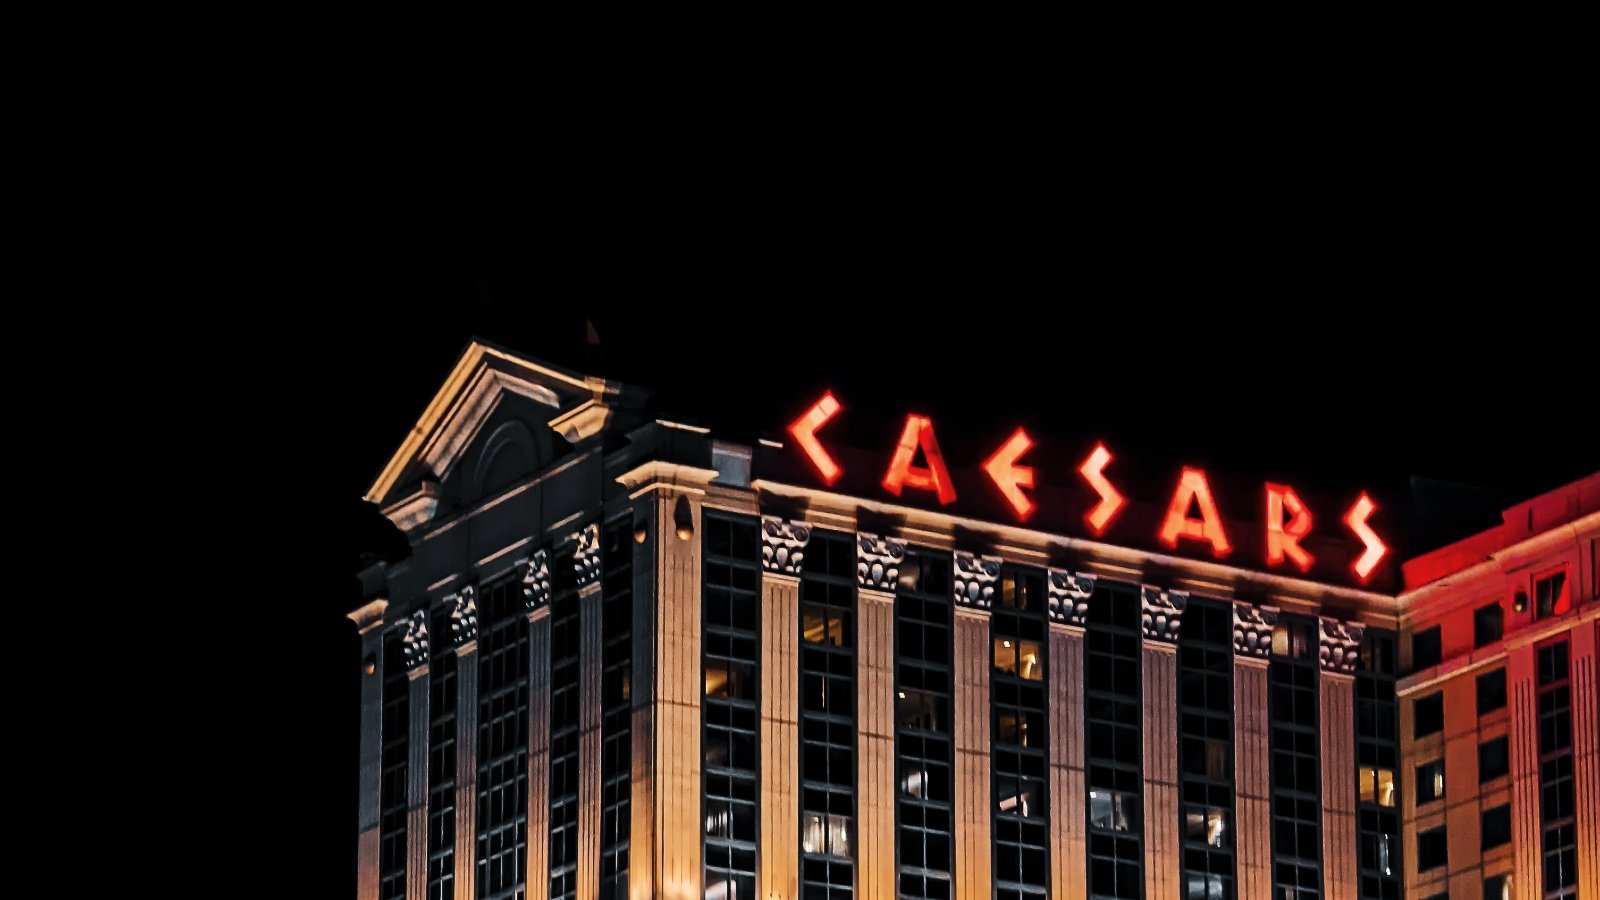 Caesars hotel and casino in Las Vegas reveals data theft to customers.